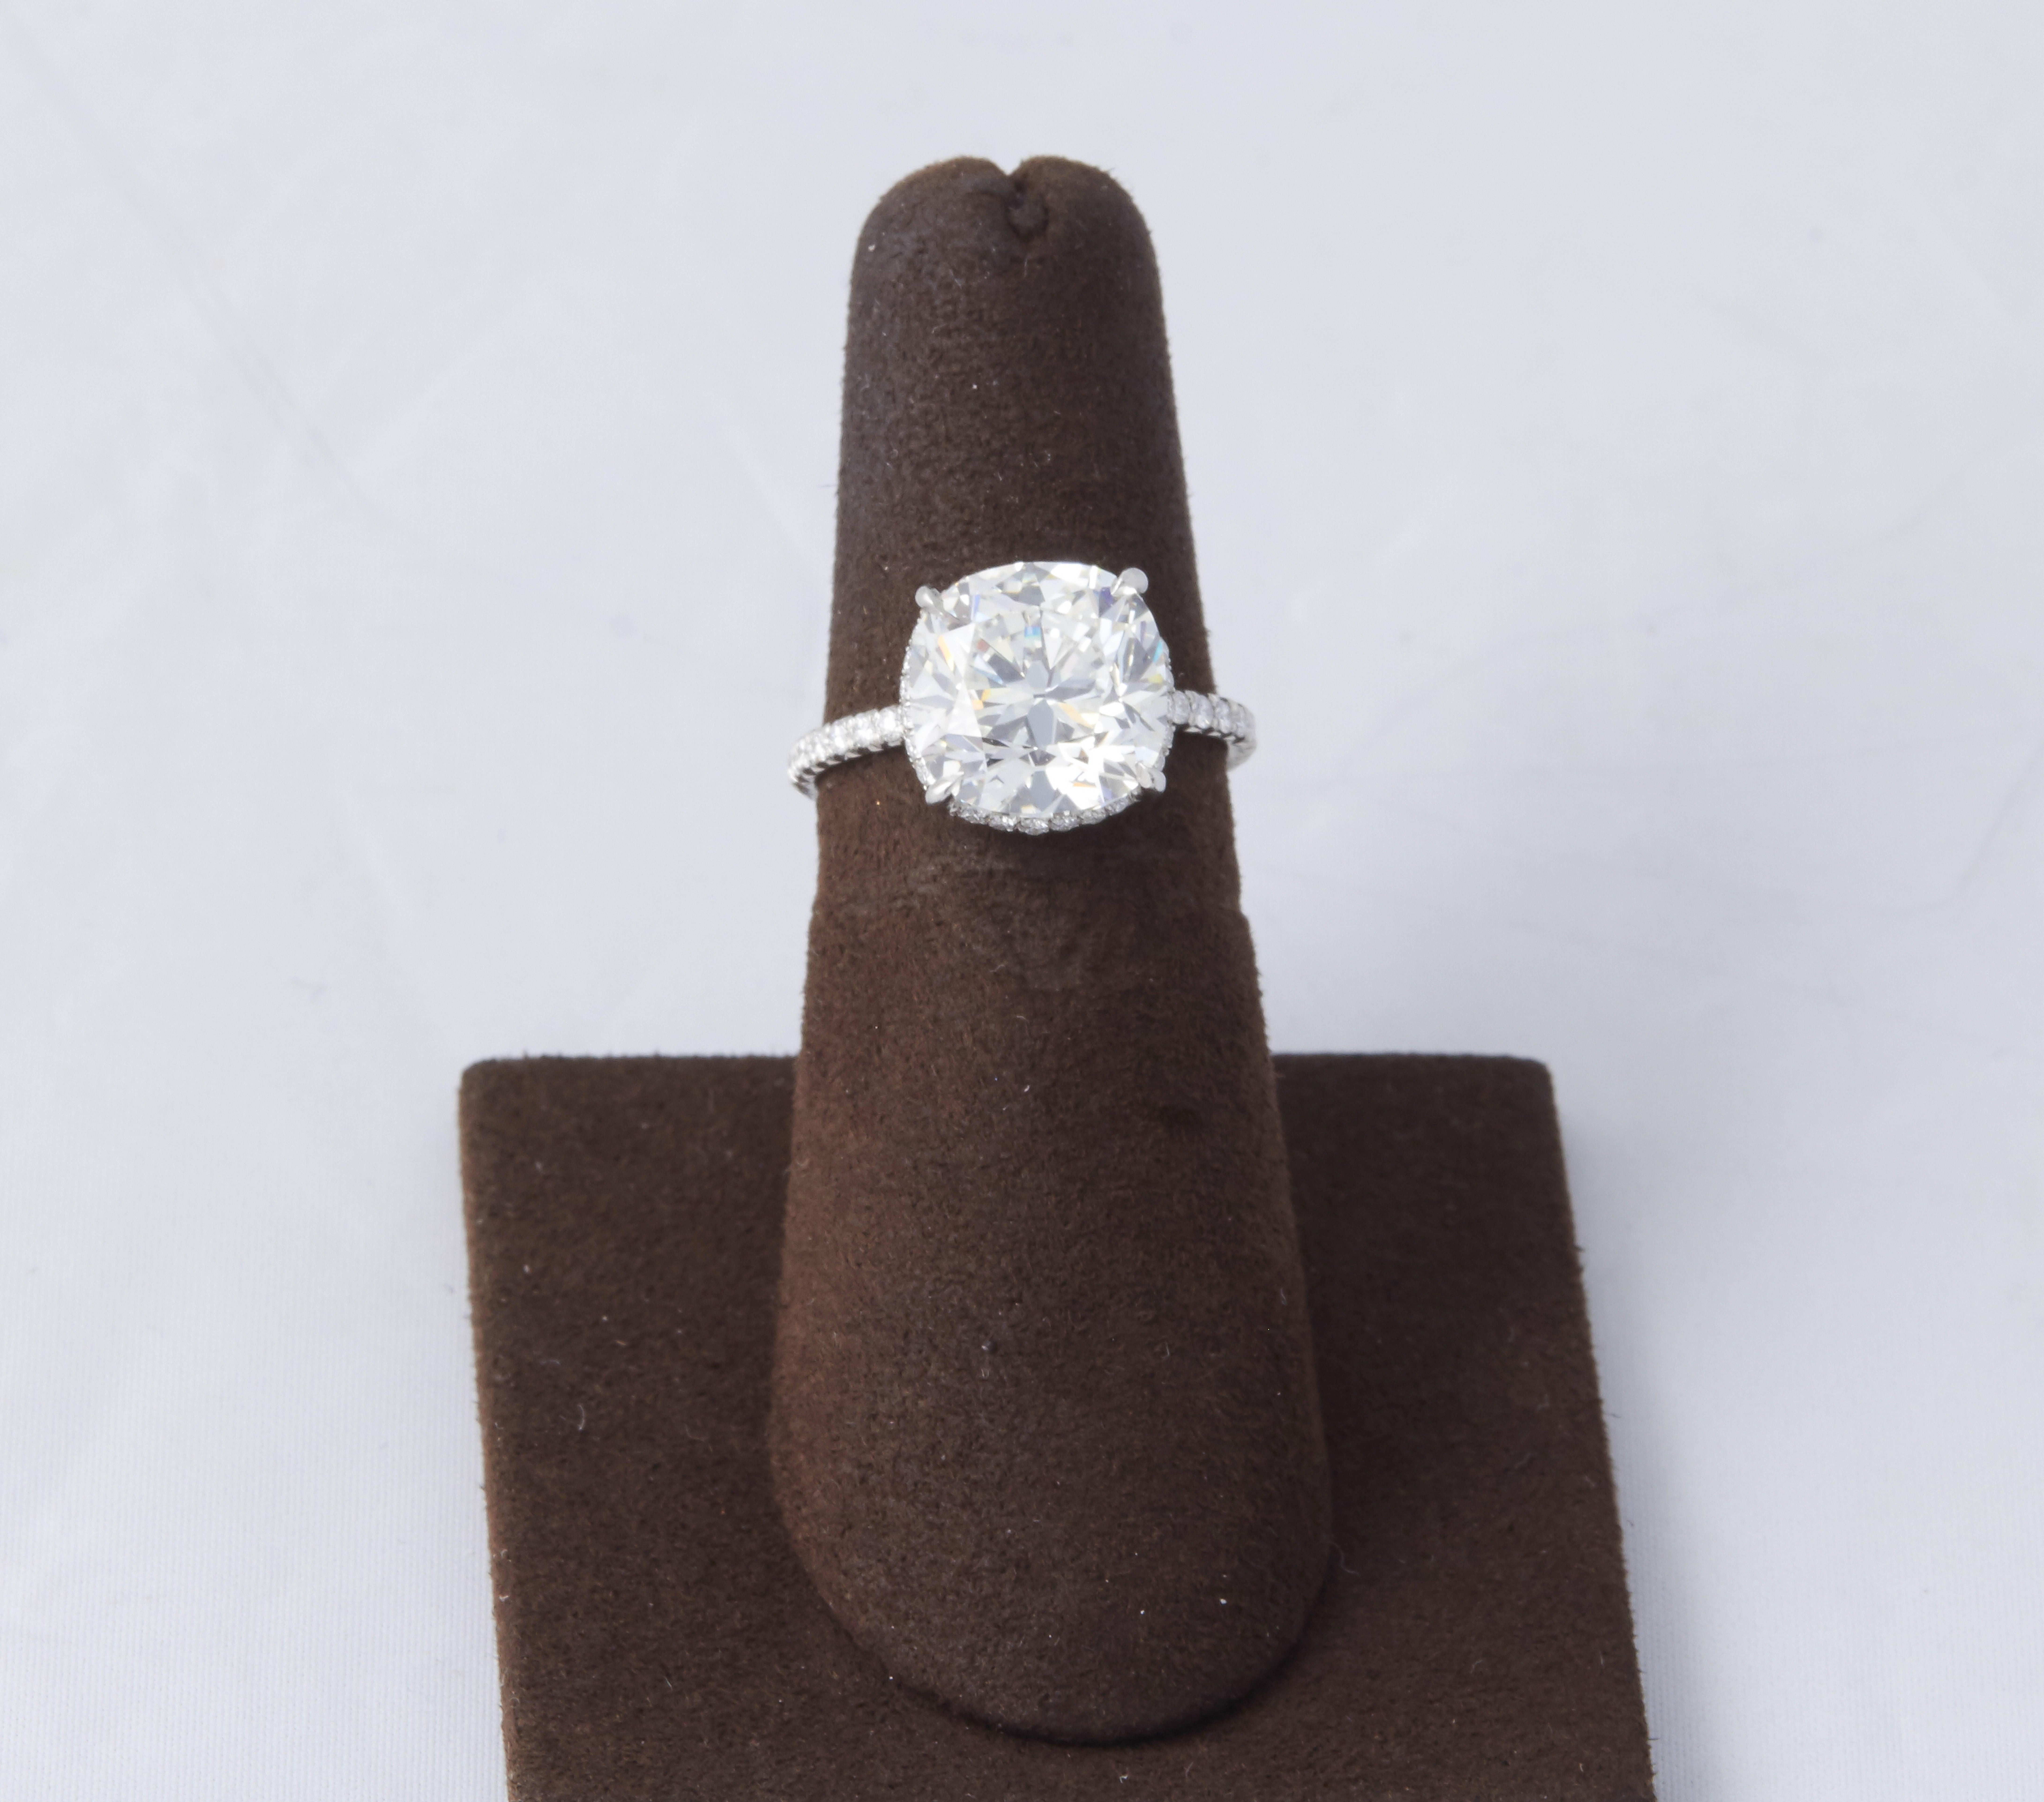 5 carat cushion cut diamond ring